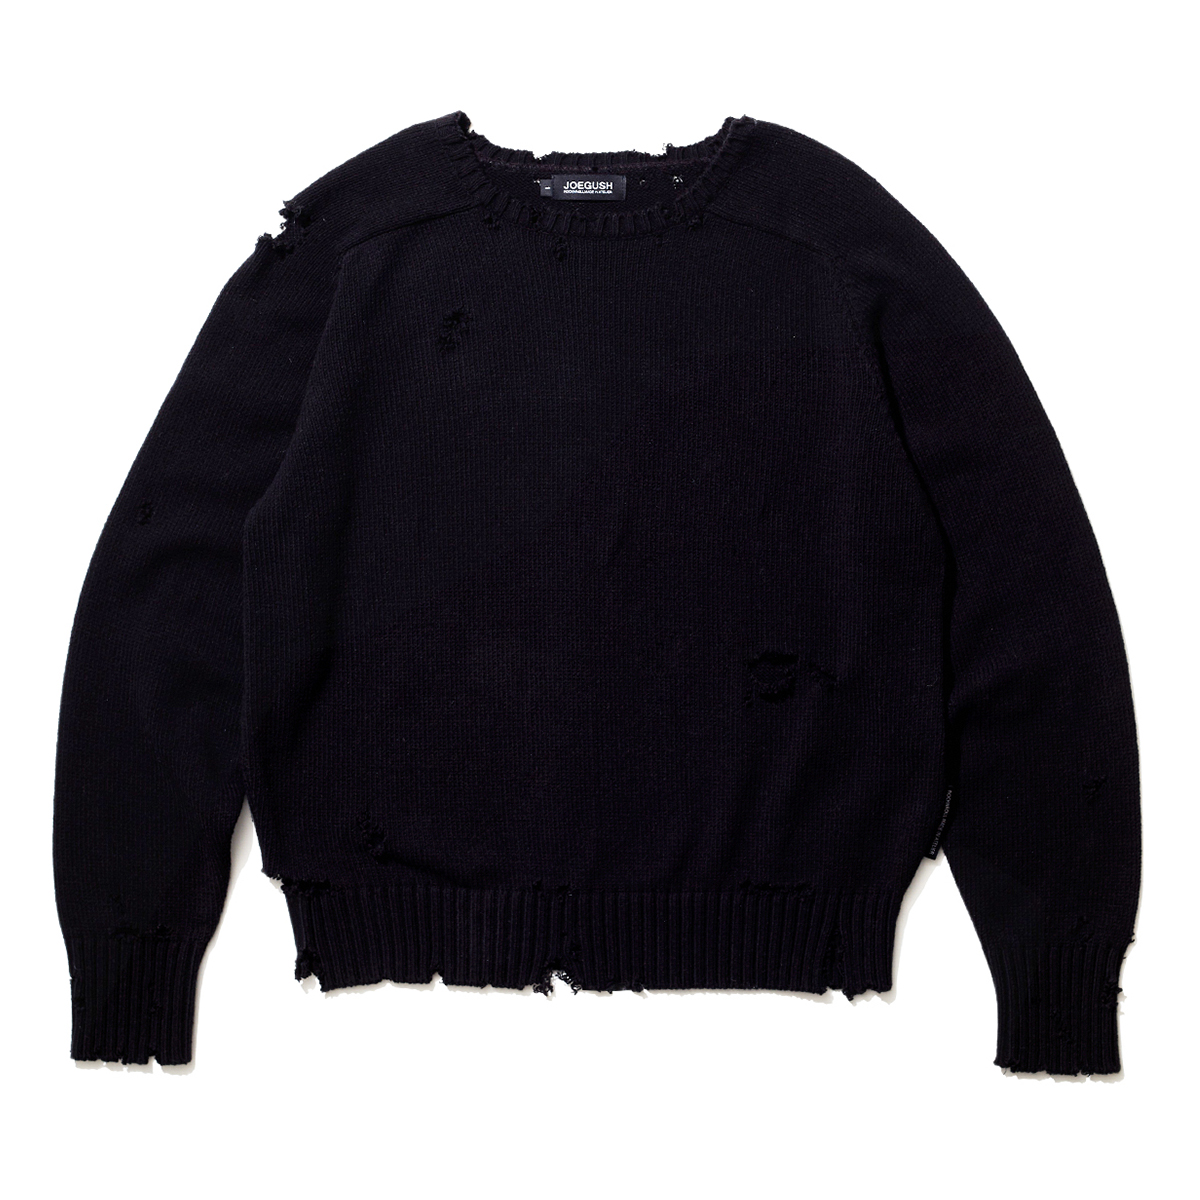 Single pullover knit Lv.2 (Distressed Ver.) (Black)